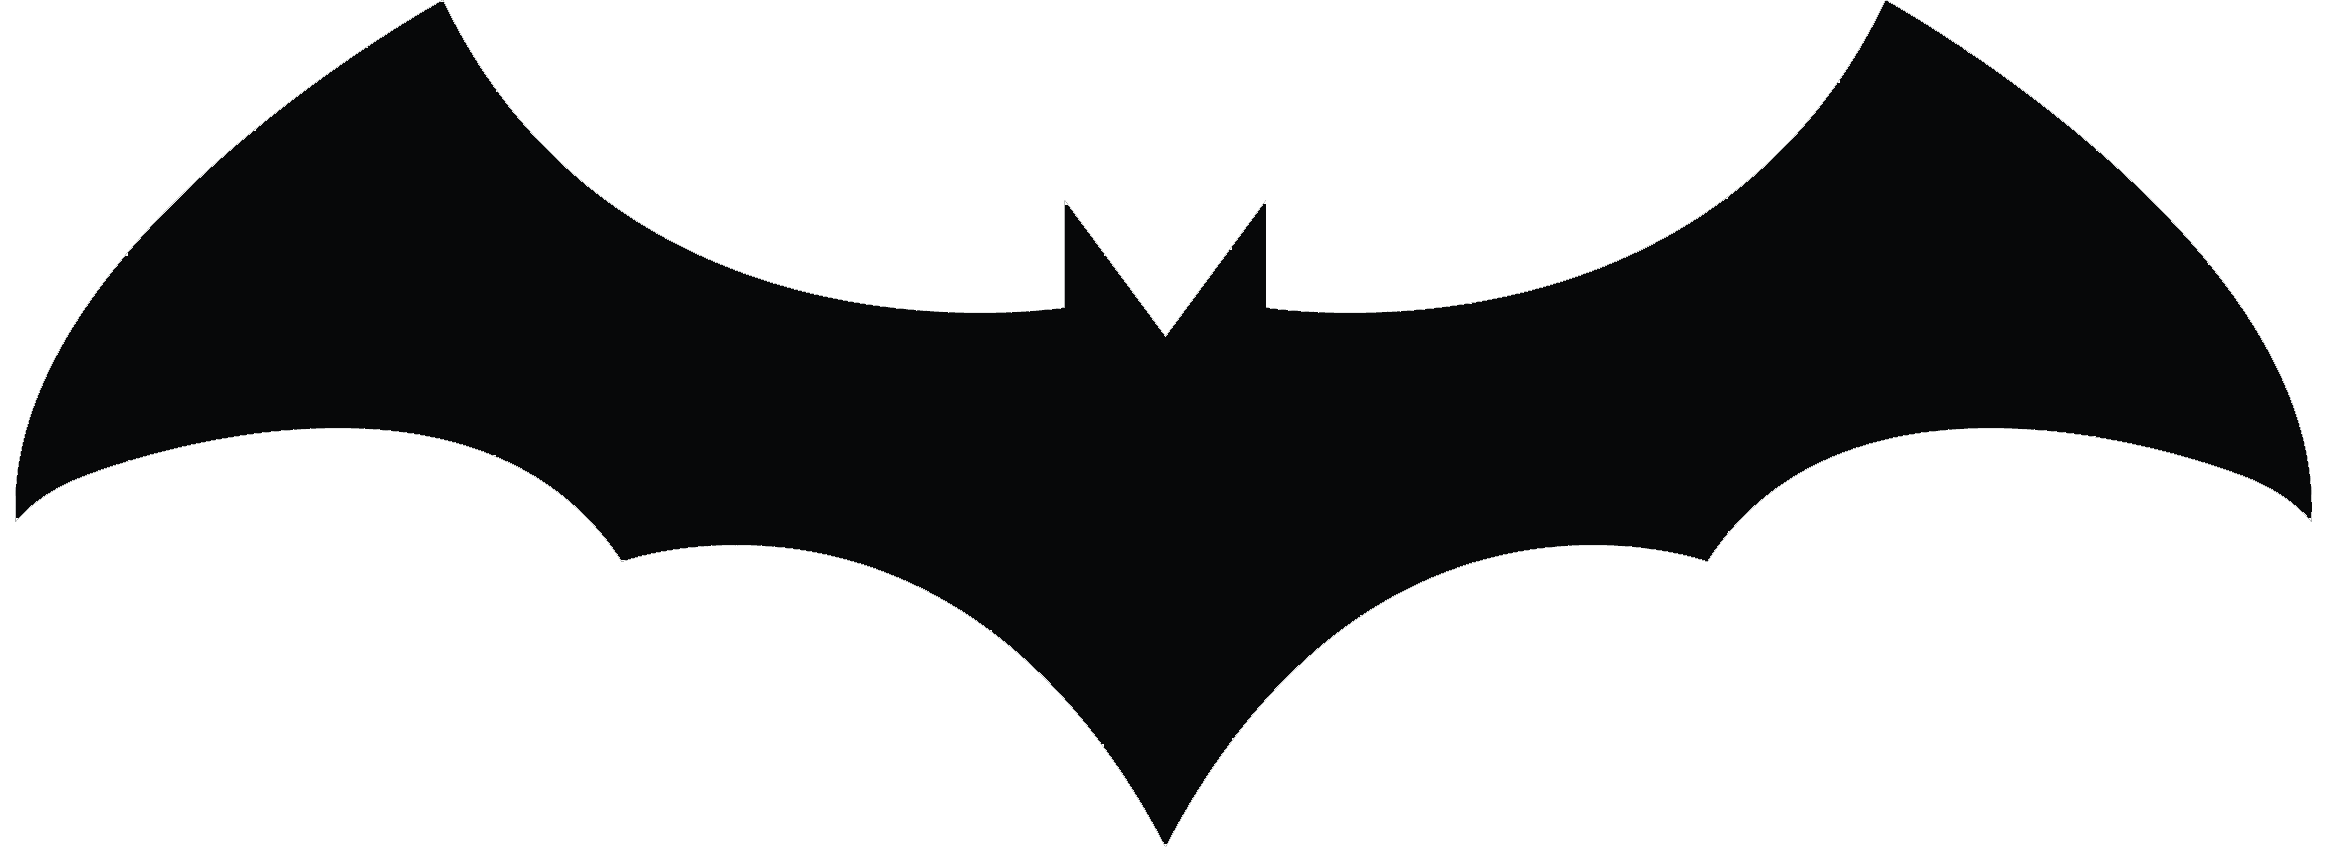 Bats Logo - Bat Logo Open Wings transparent PNG - StickPNG